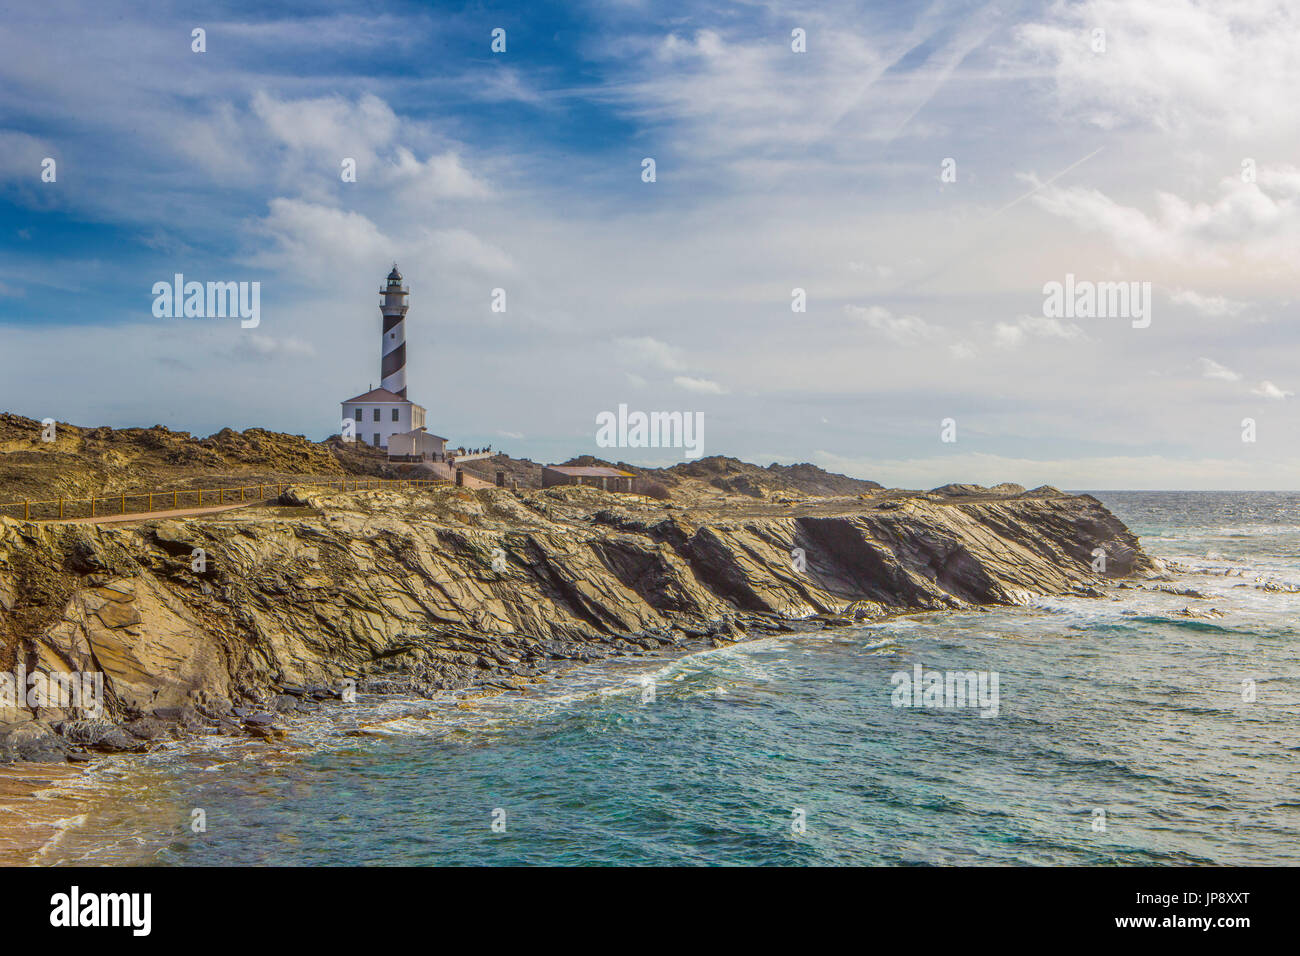 Spain balearic Islands, Menorca Island, Favaritx Lighthouse, Stock Photo